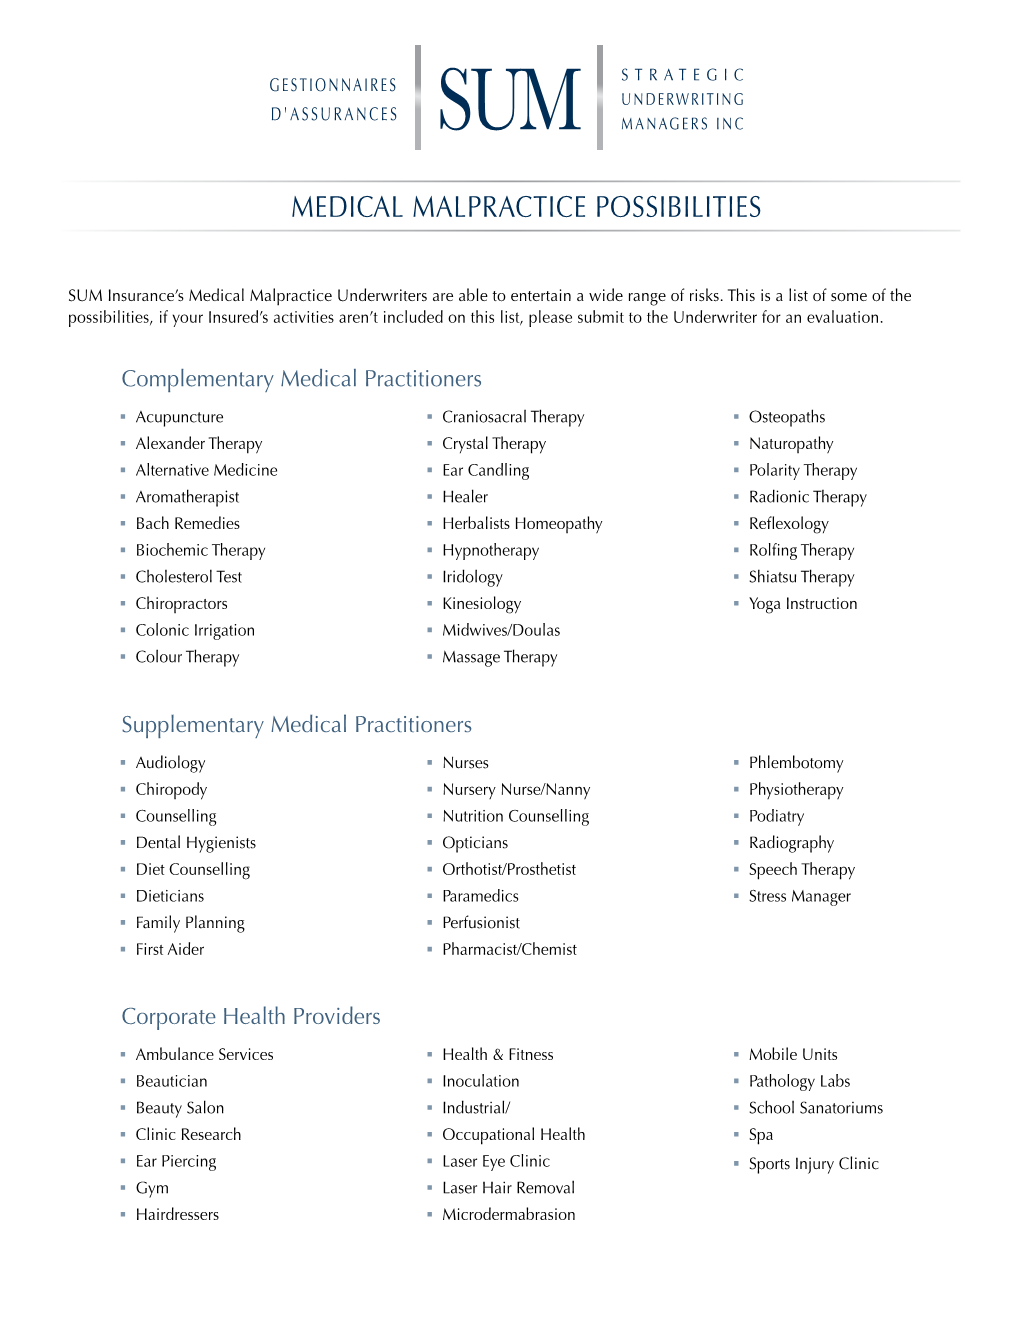 Medical Malpractice Possibilities